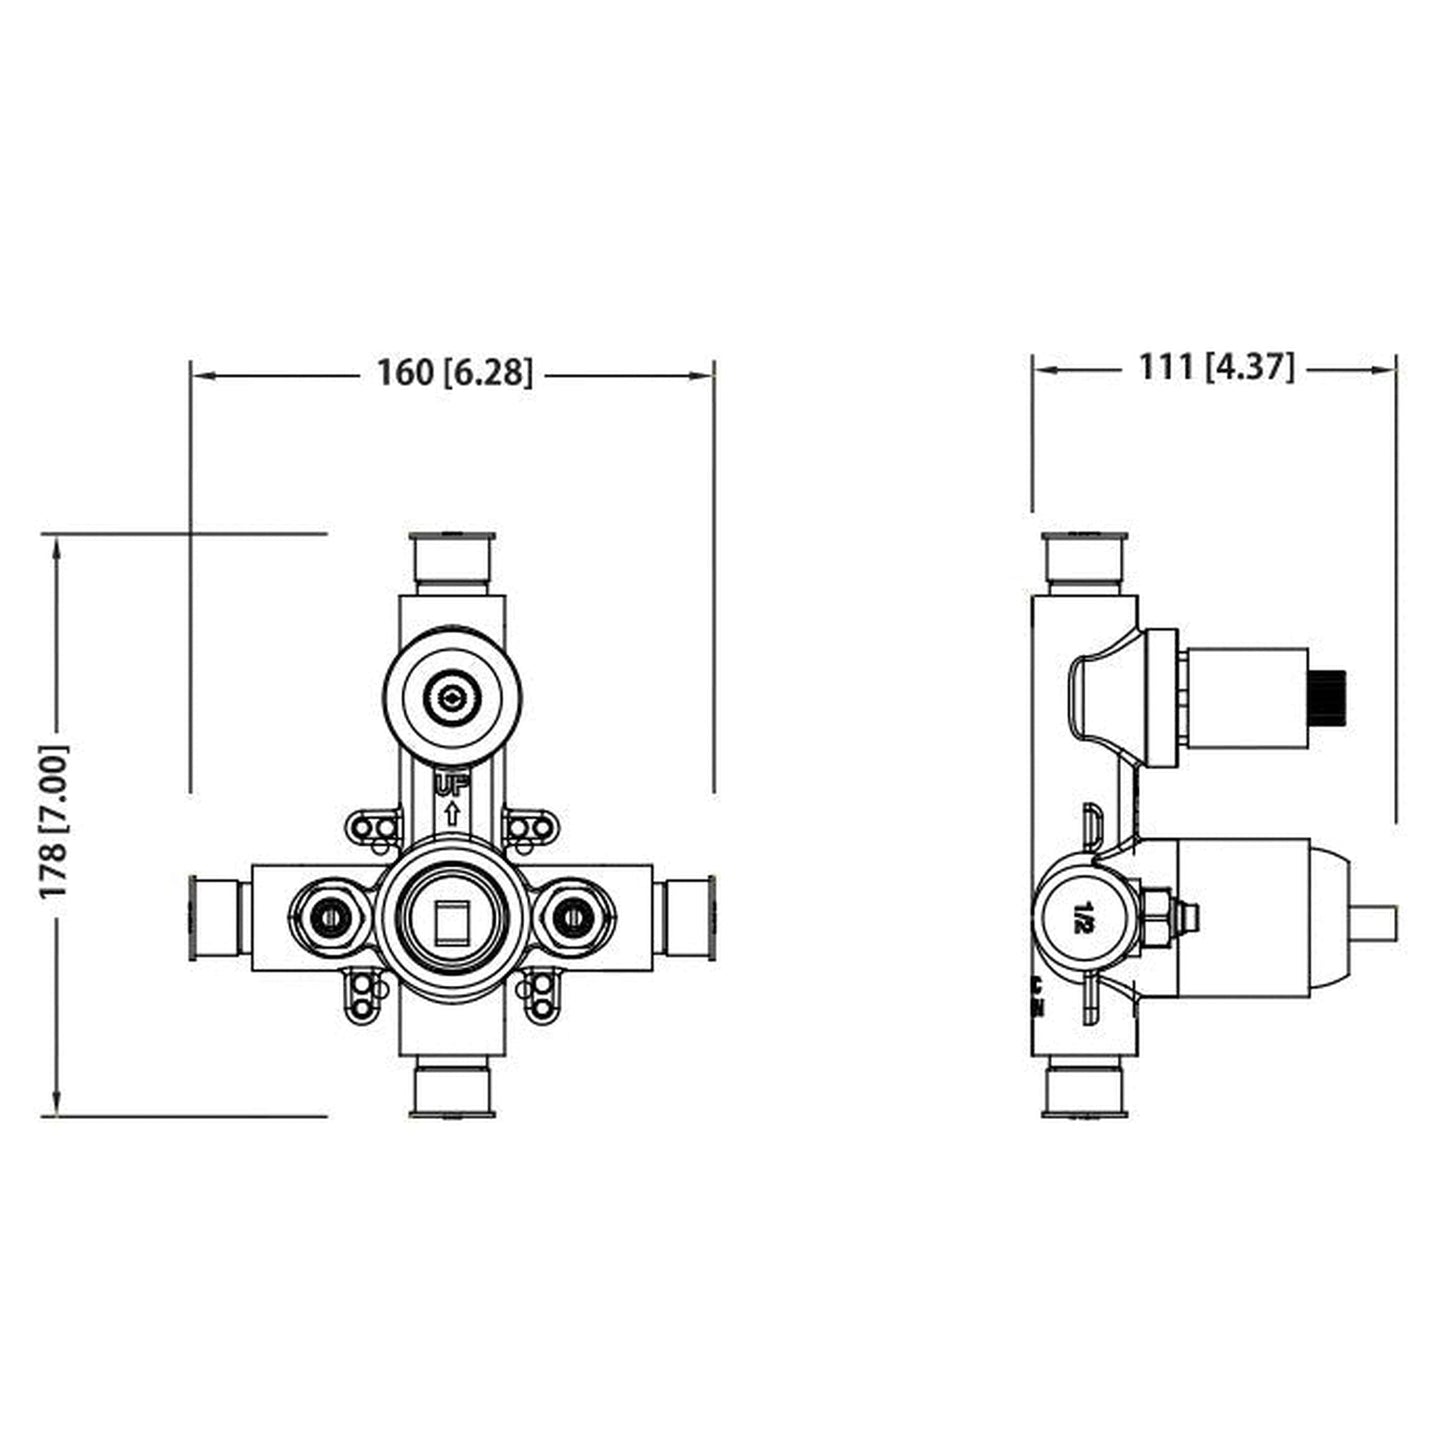 Isenberg Universal Fixtures 0.50" Brushed Nickel PVD Pressure Balance Valve With Integrated 2-Way Diverter